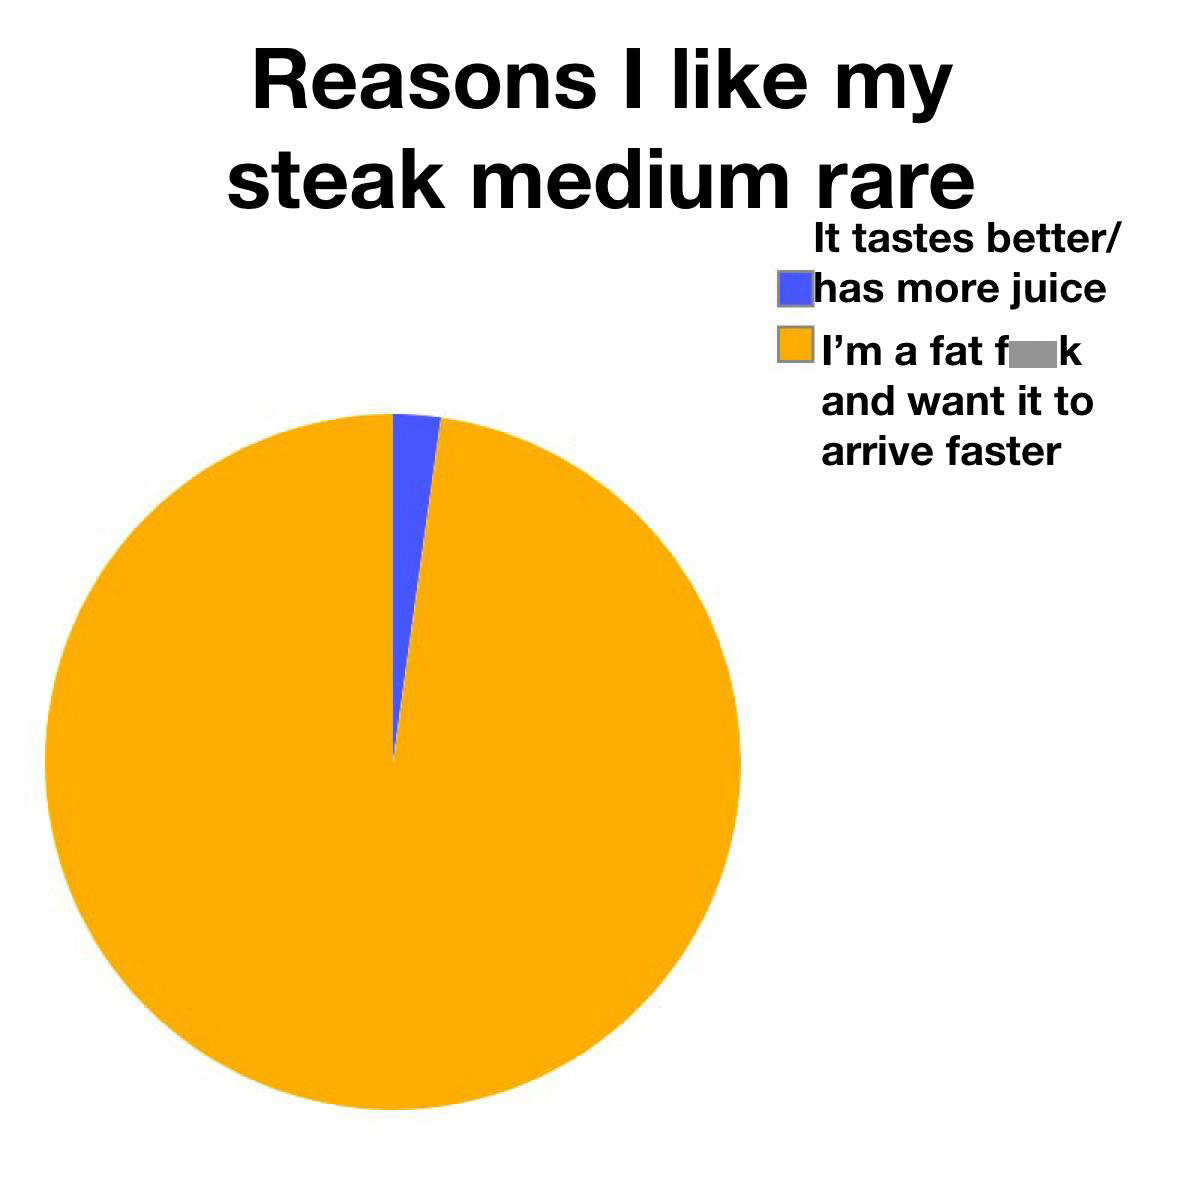 dank memes - wholesome bi memes tim drake - Reasons I my steak medium rare It tastes better has more juice I'm a fat f k and want it to arrive faster